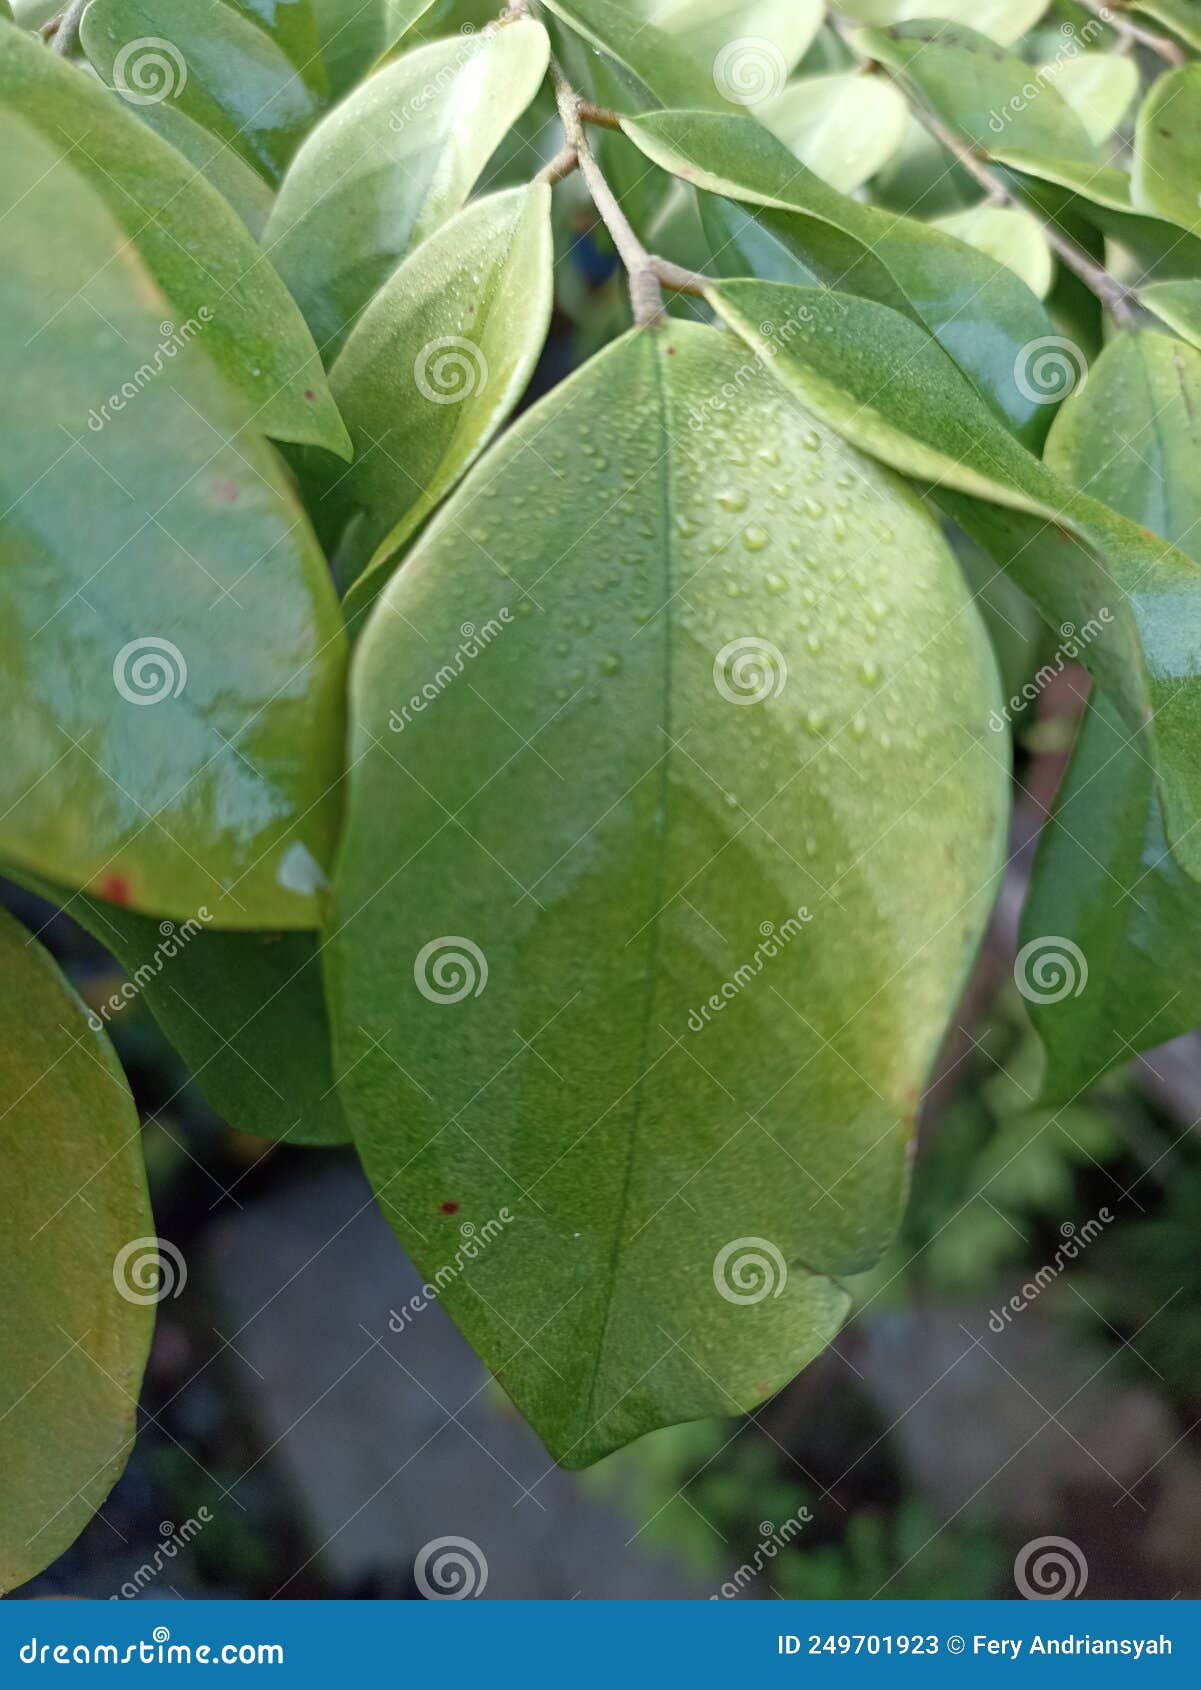 embun above green leafes of starfruit.